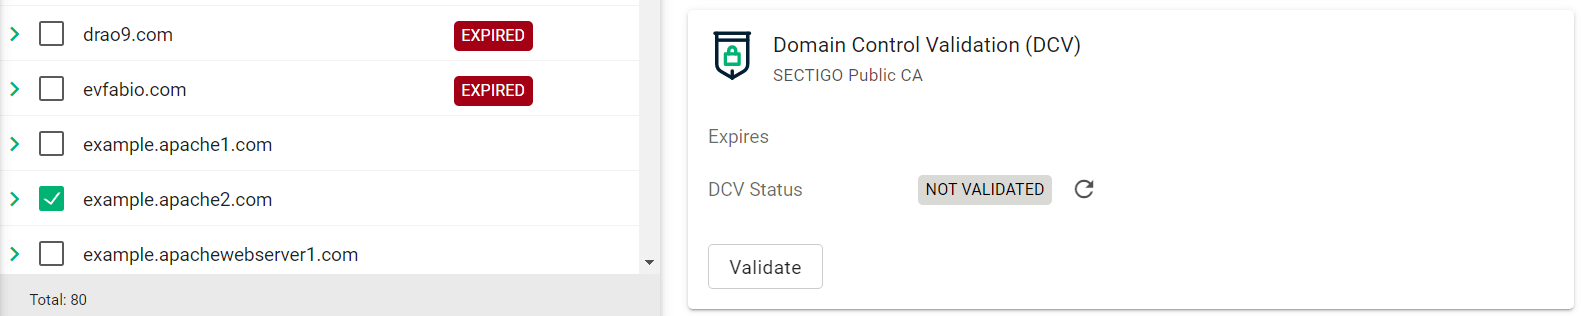 SCM validate domain